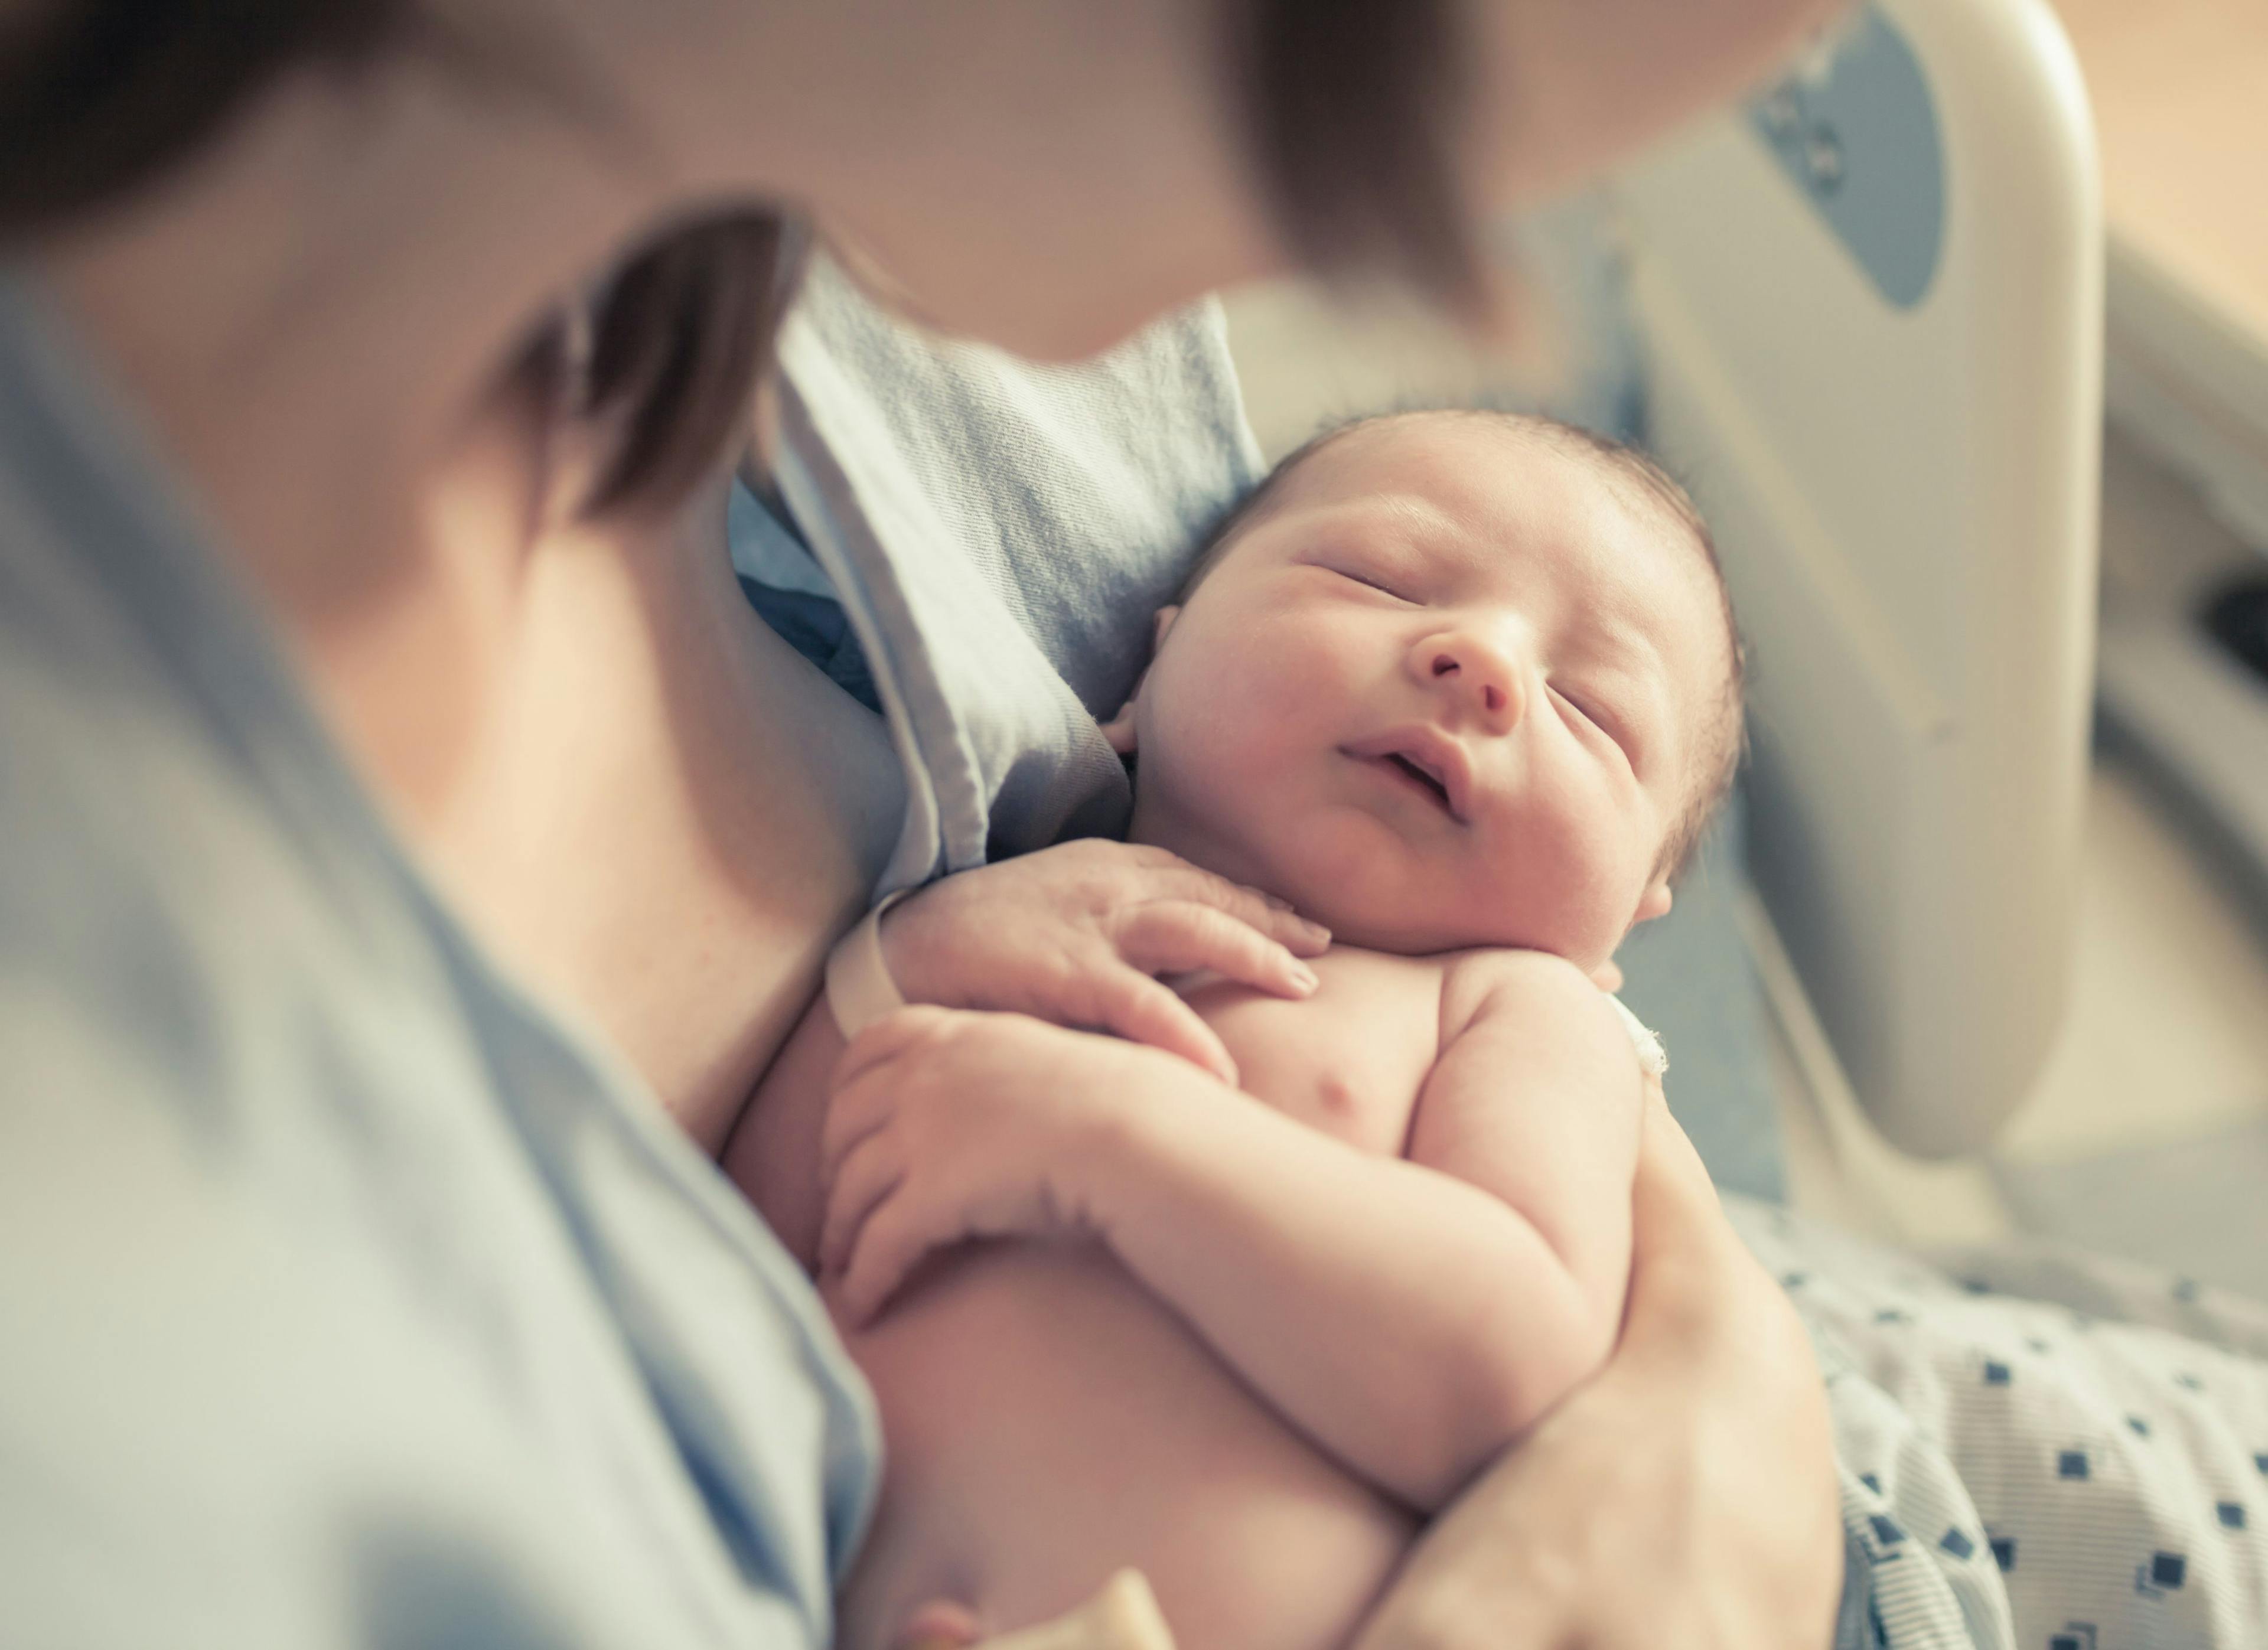 Mother holding newborn baby | Image credit: kieferpix - stock.adobe.com